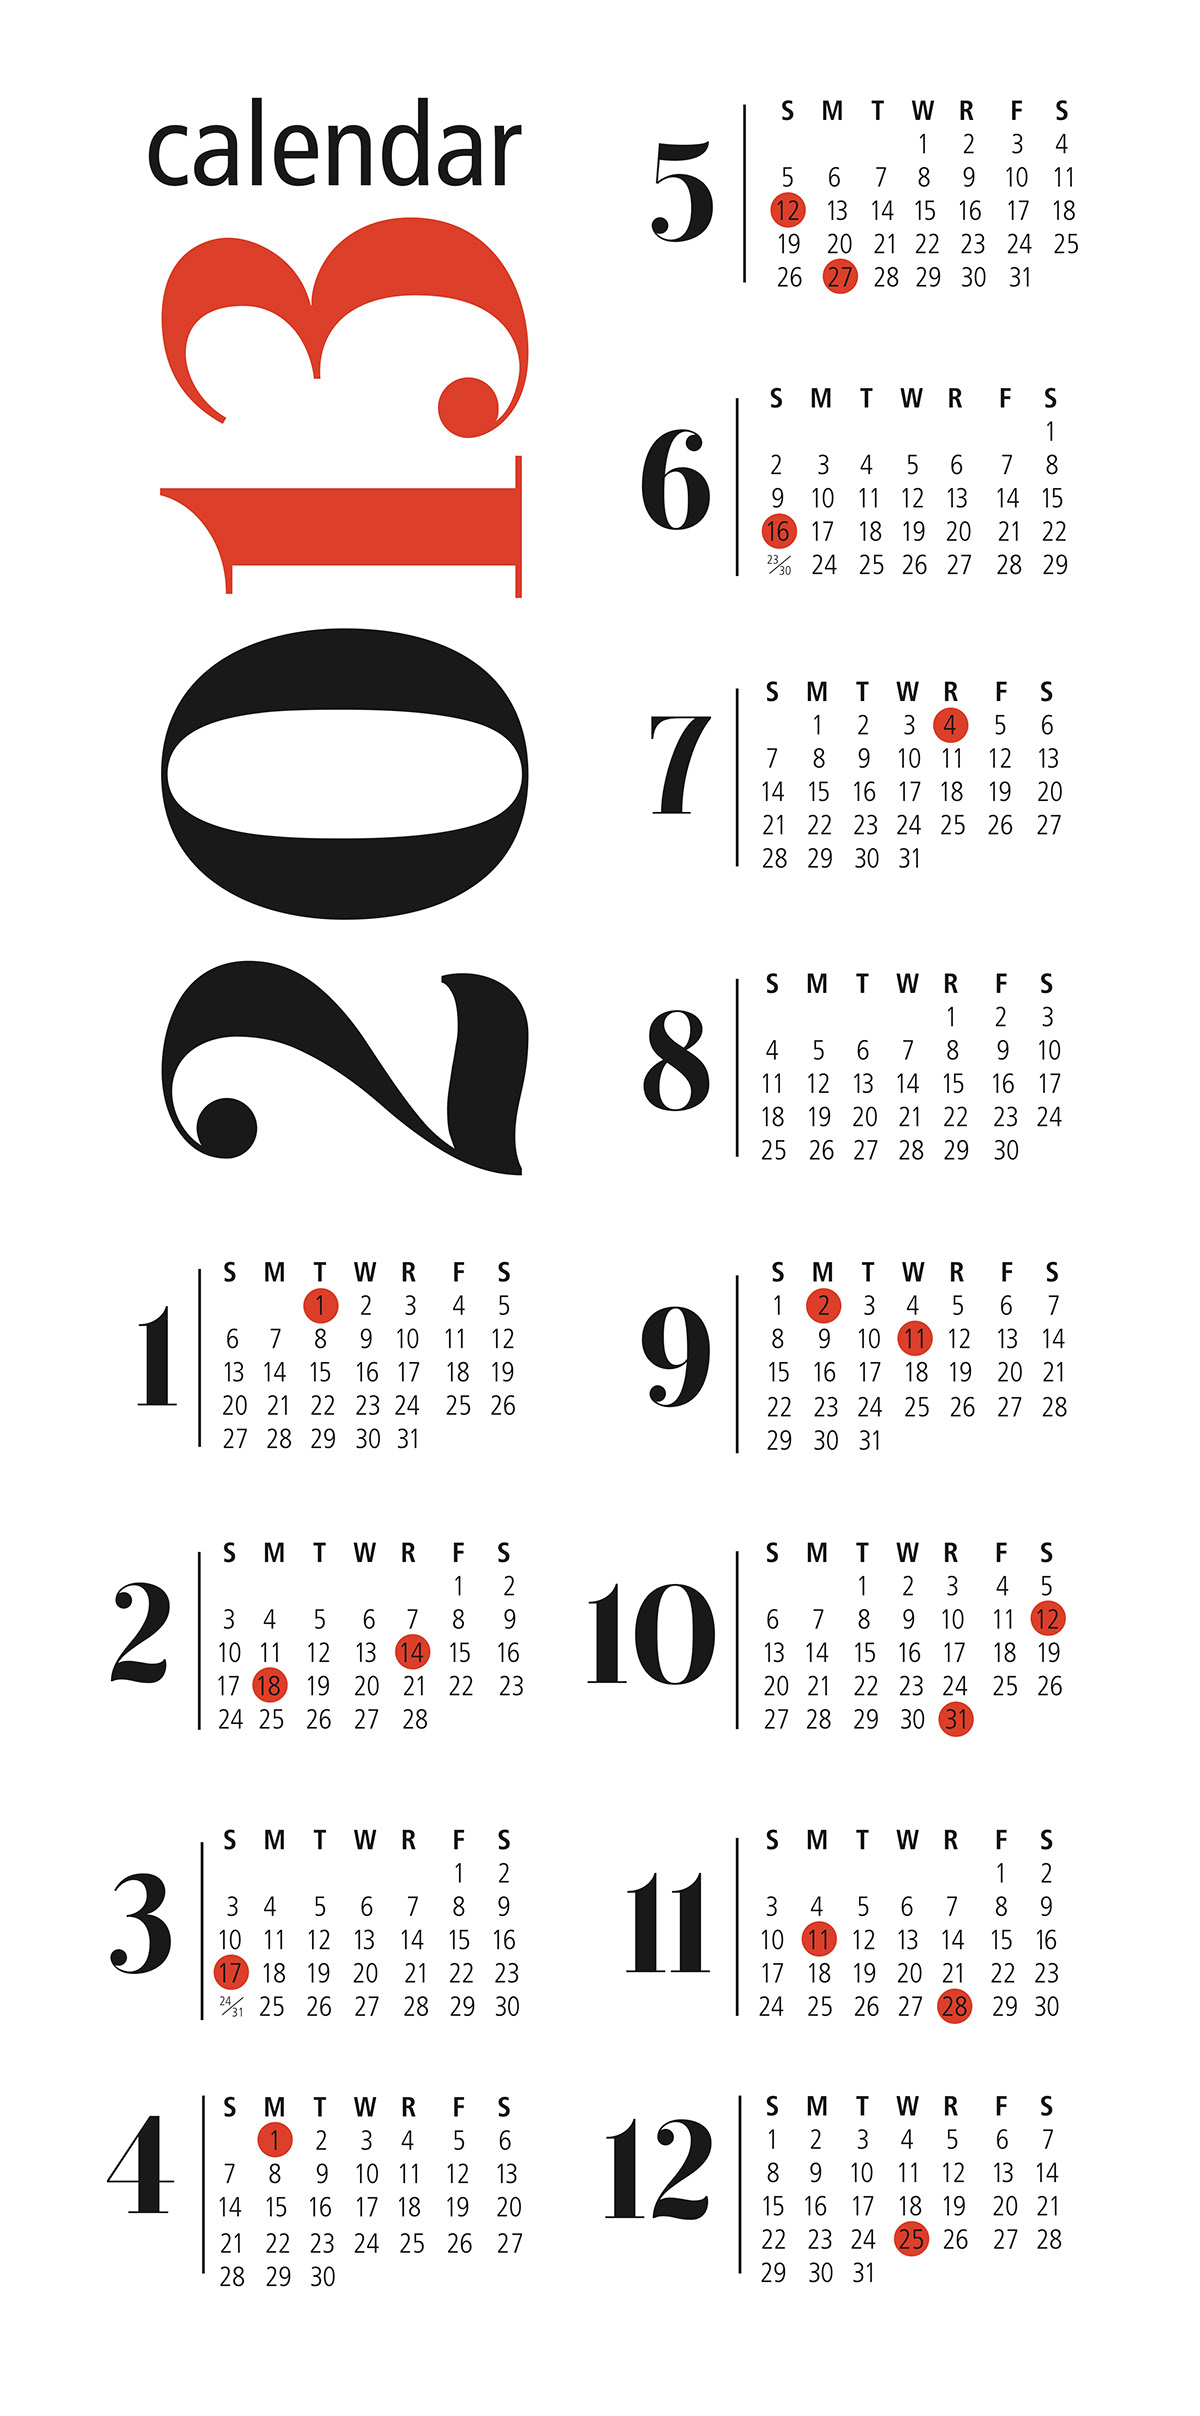 calendar sans serif serif